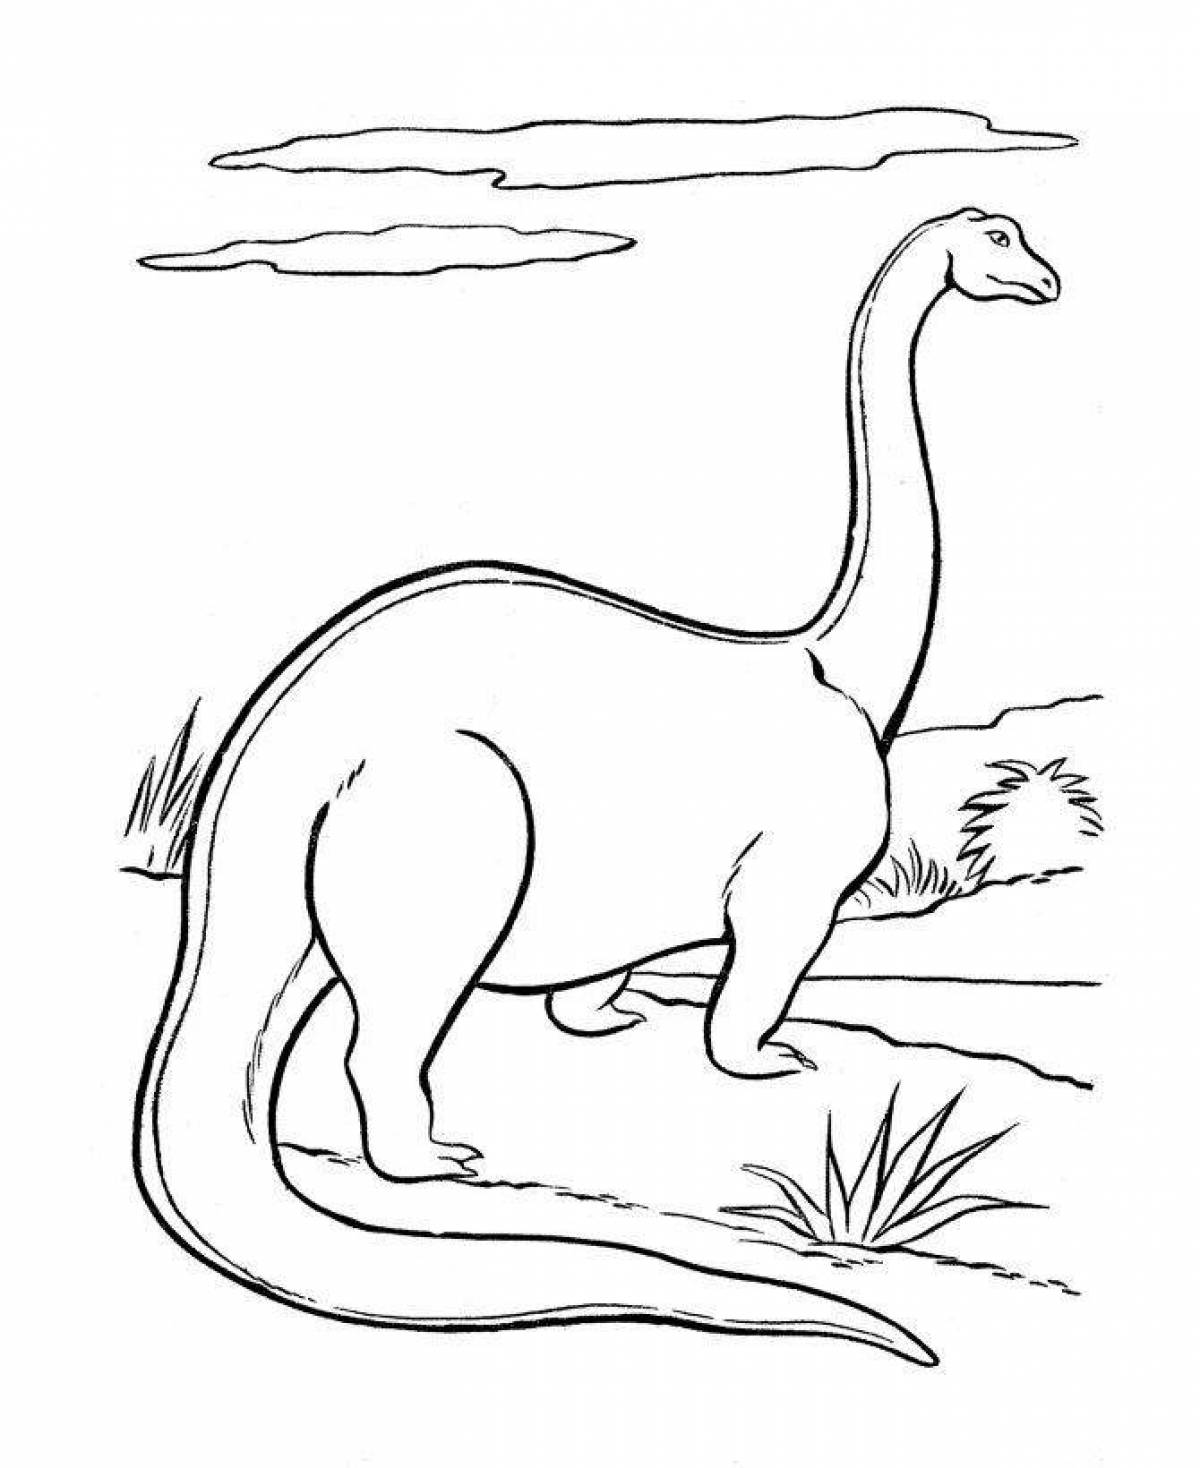 Brontosaurus playful coloring page